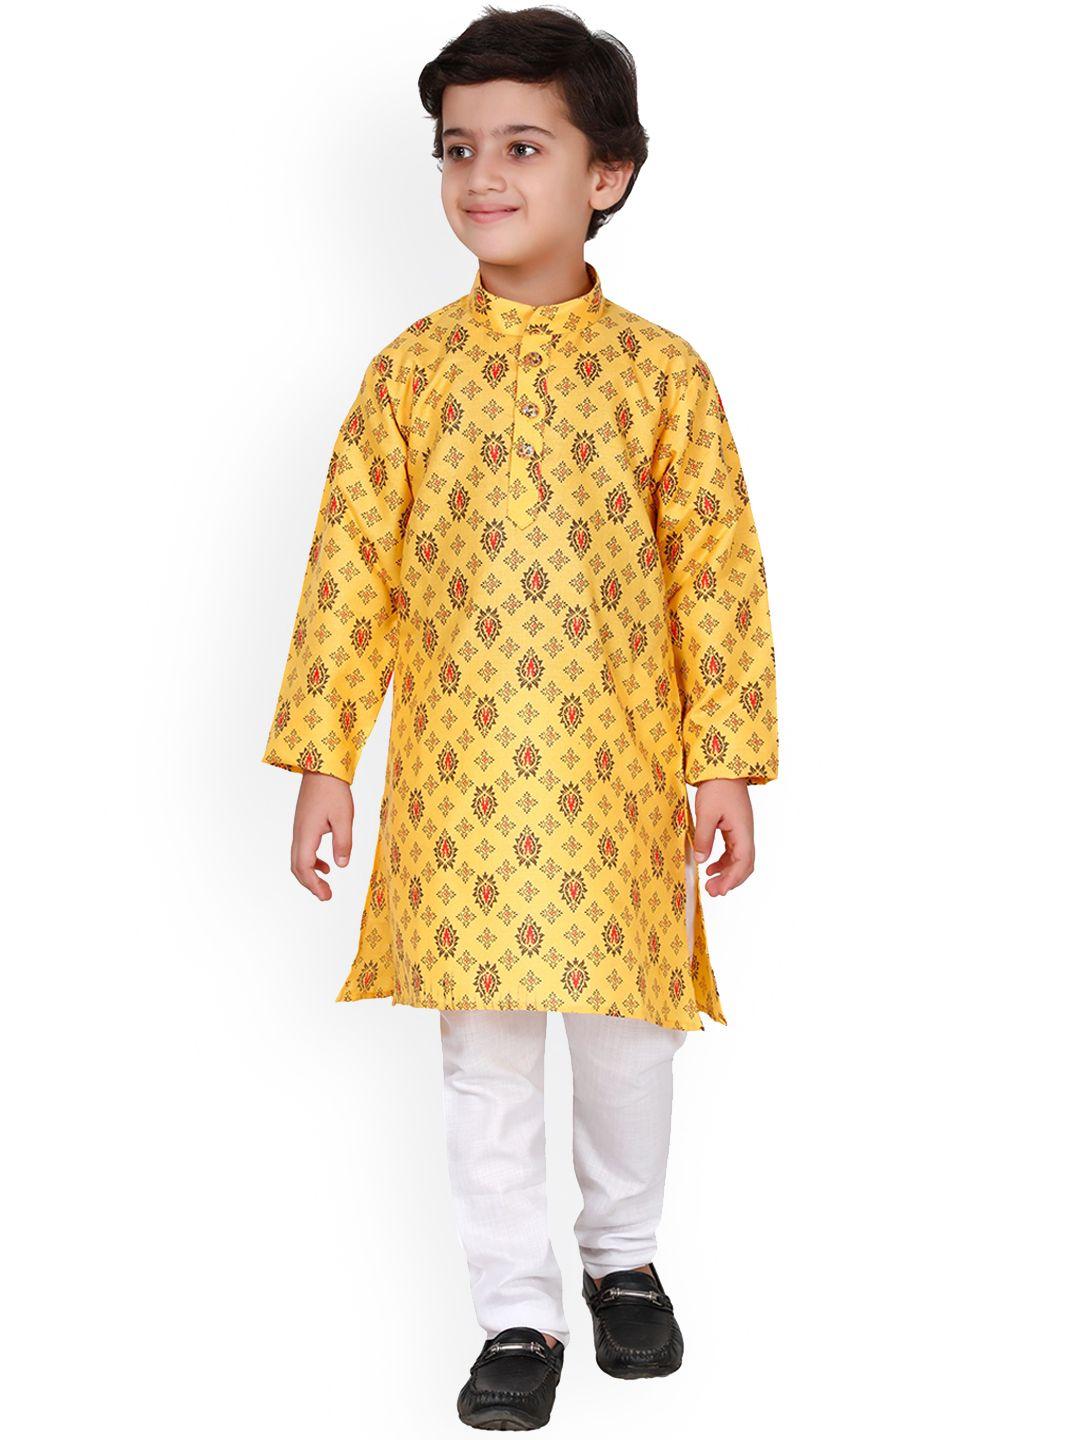 fourfolds boys yellow & white ethnic motifs printed kurta with pyjamas